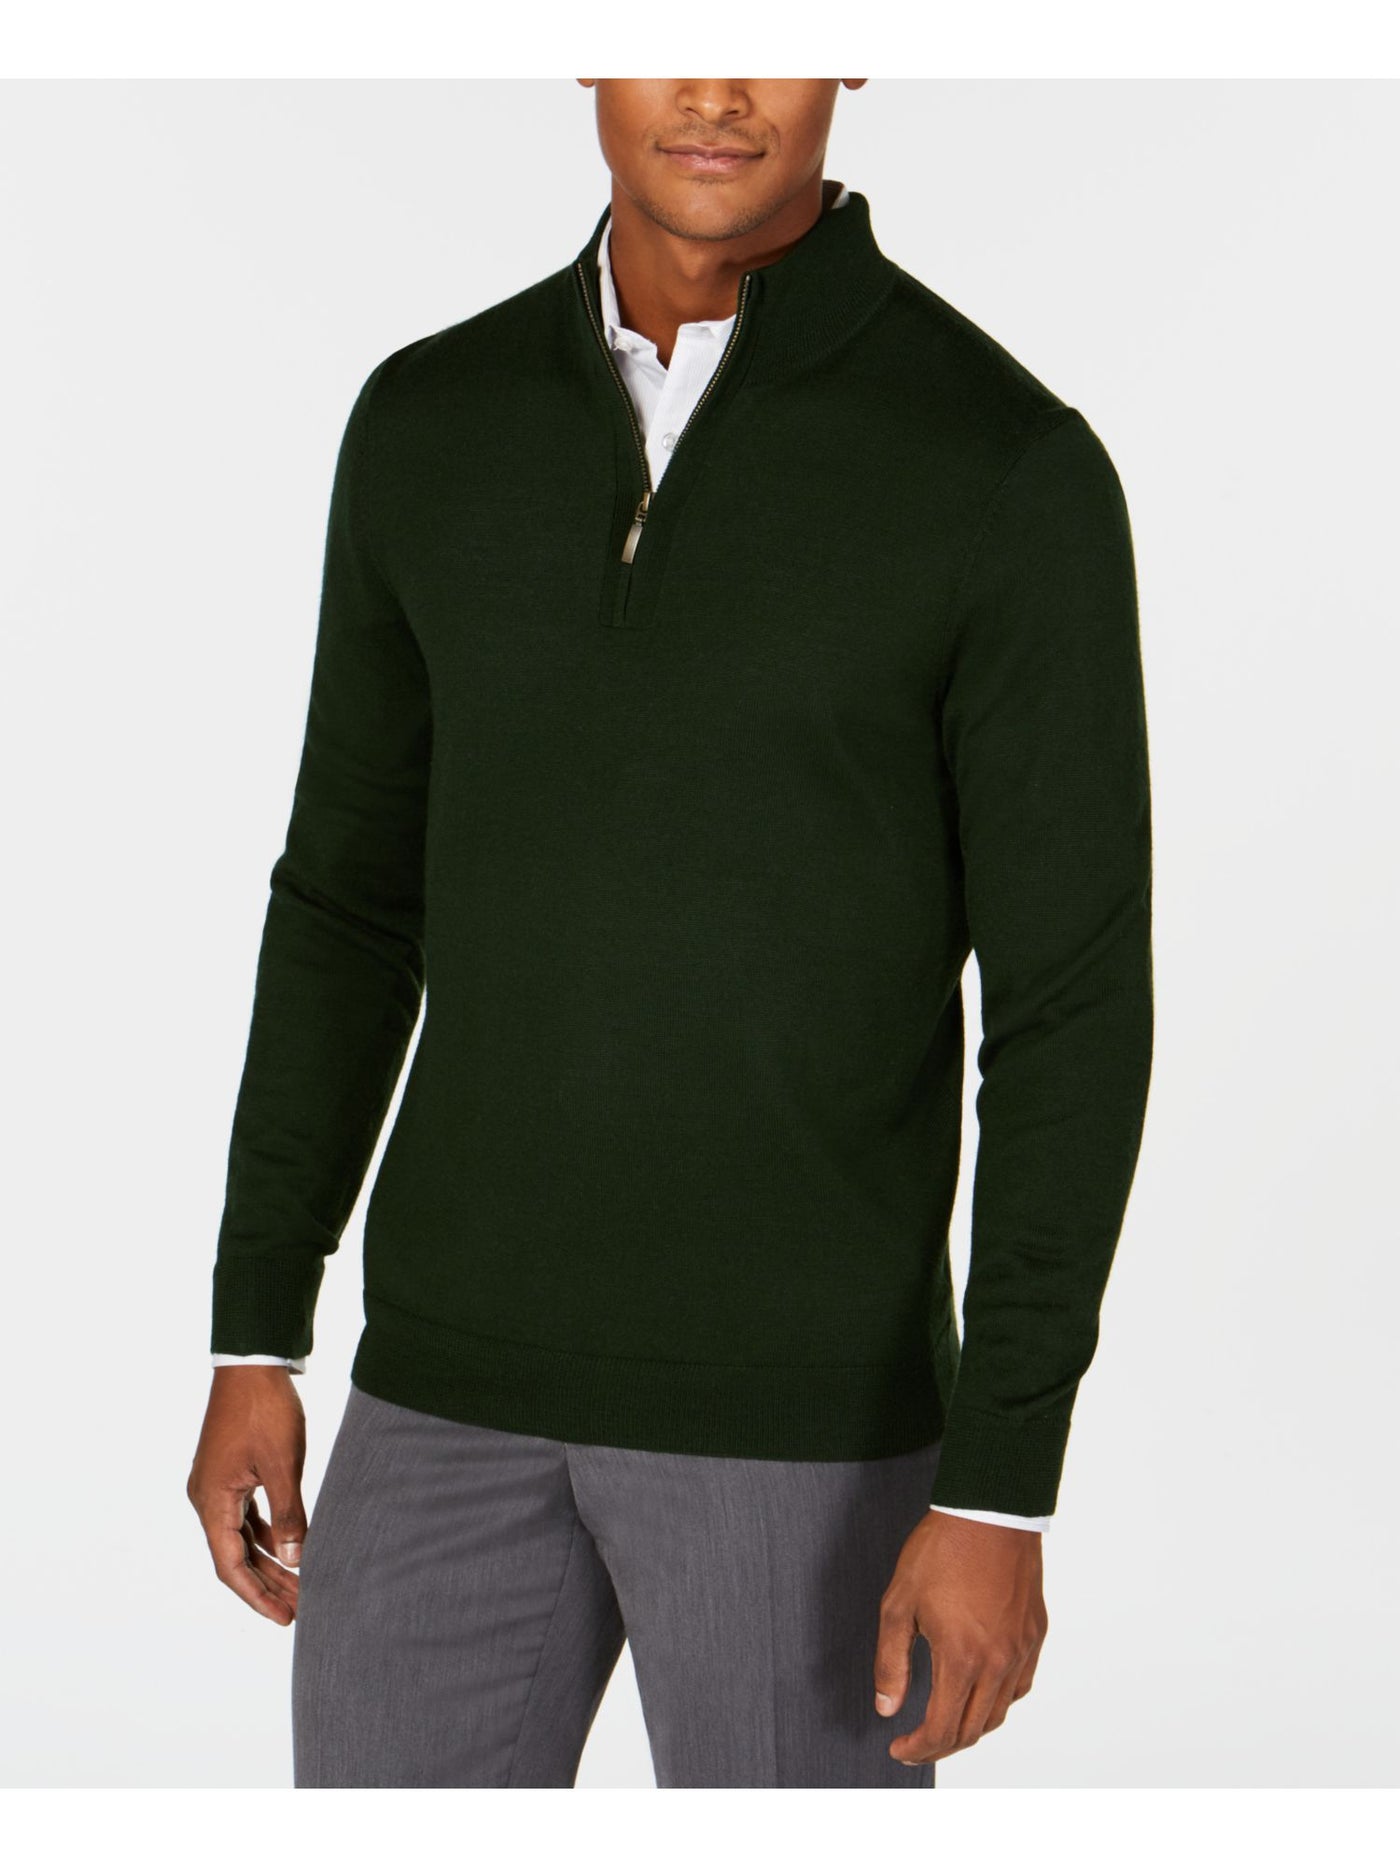 CLUBROOM Mens Black Heather Mock Quarter-Zip Pullover Sweater S